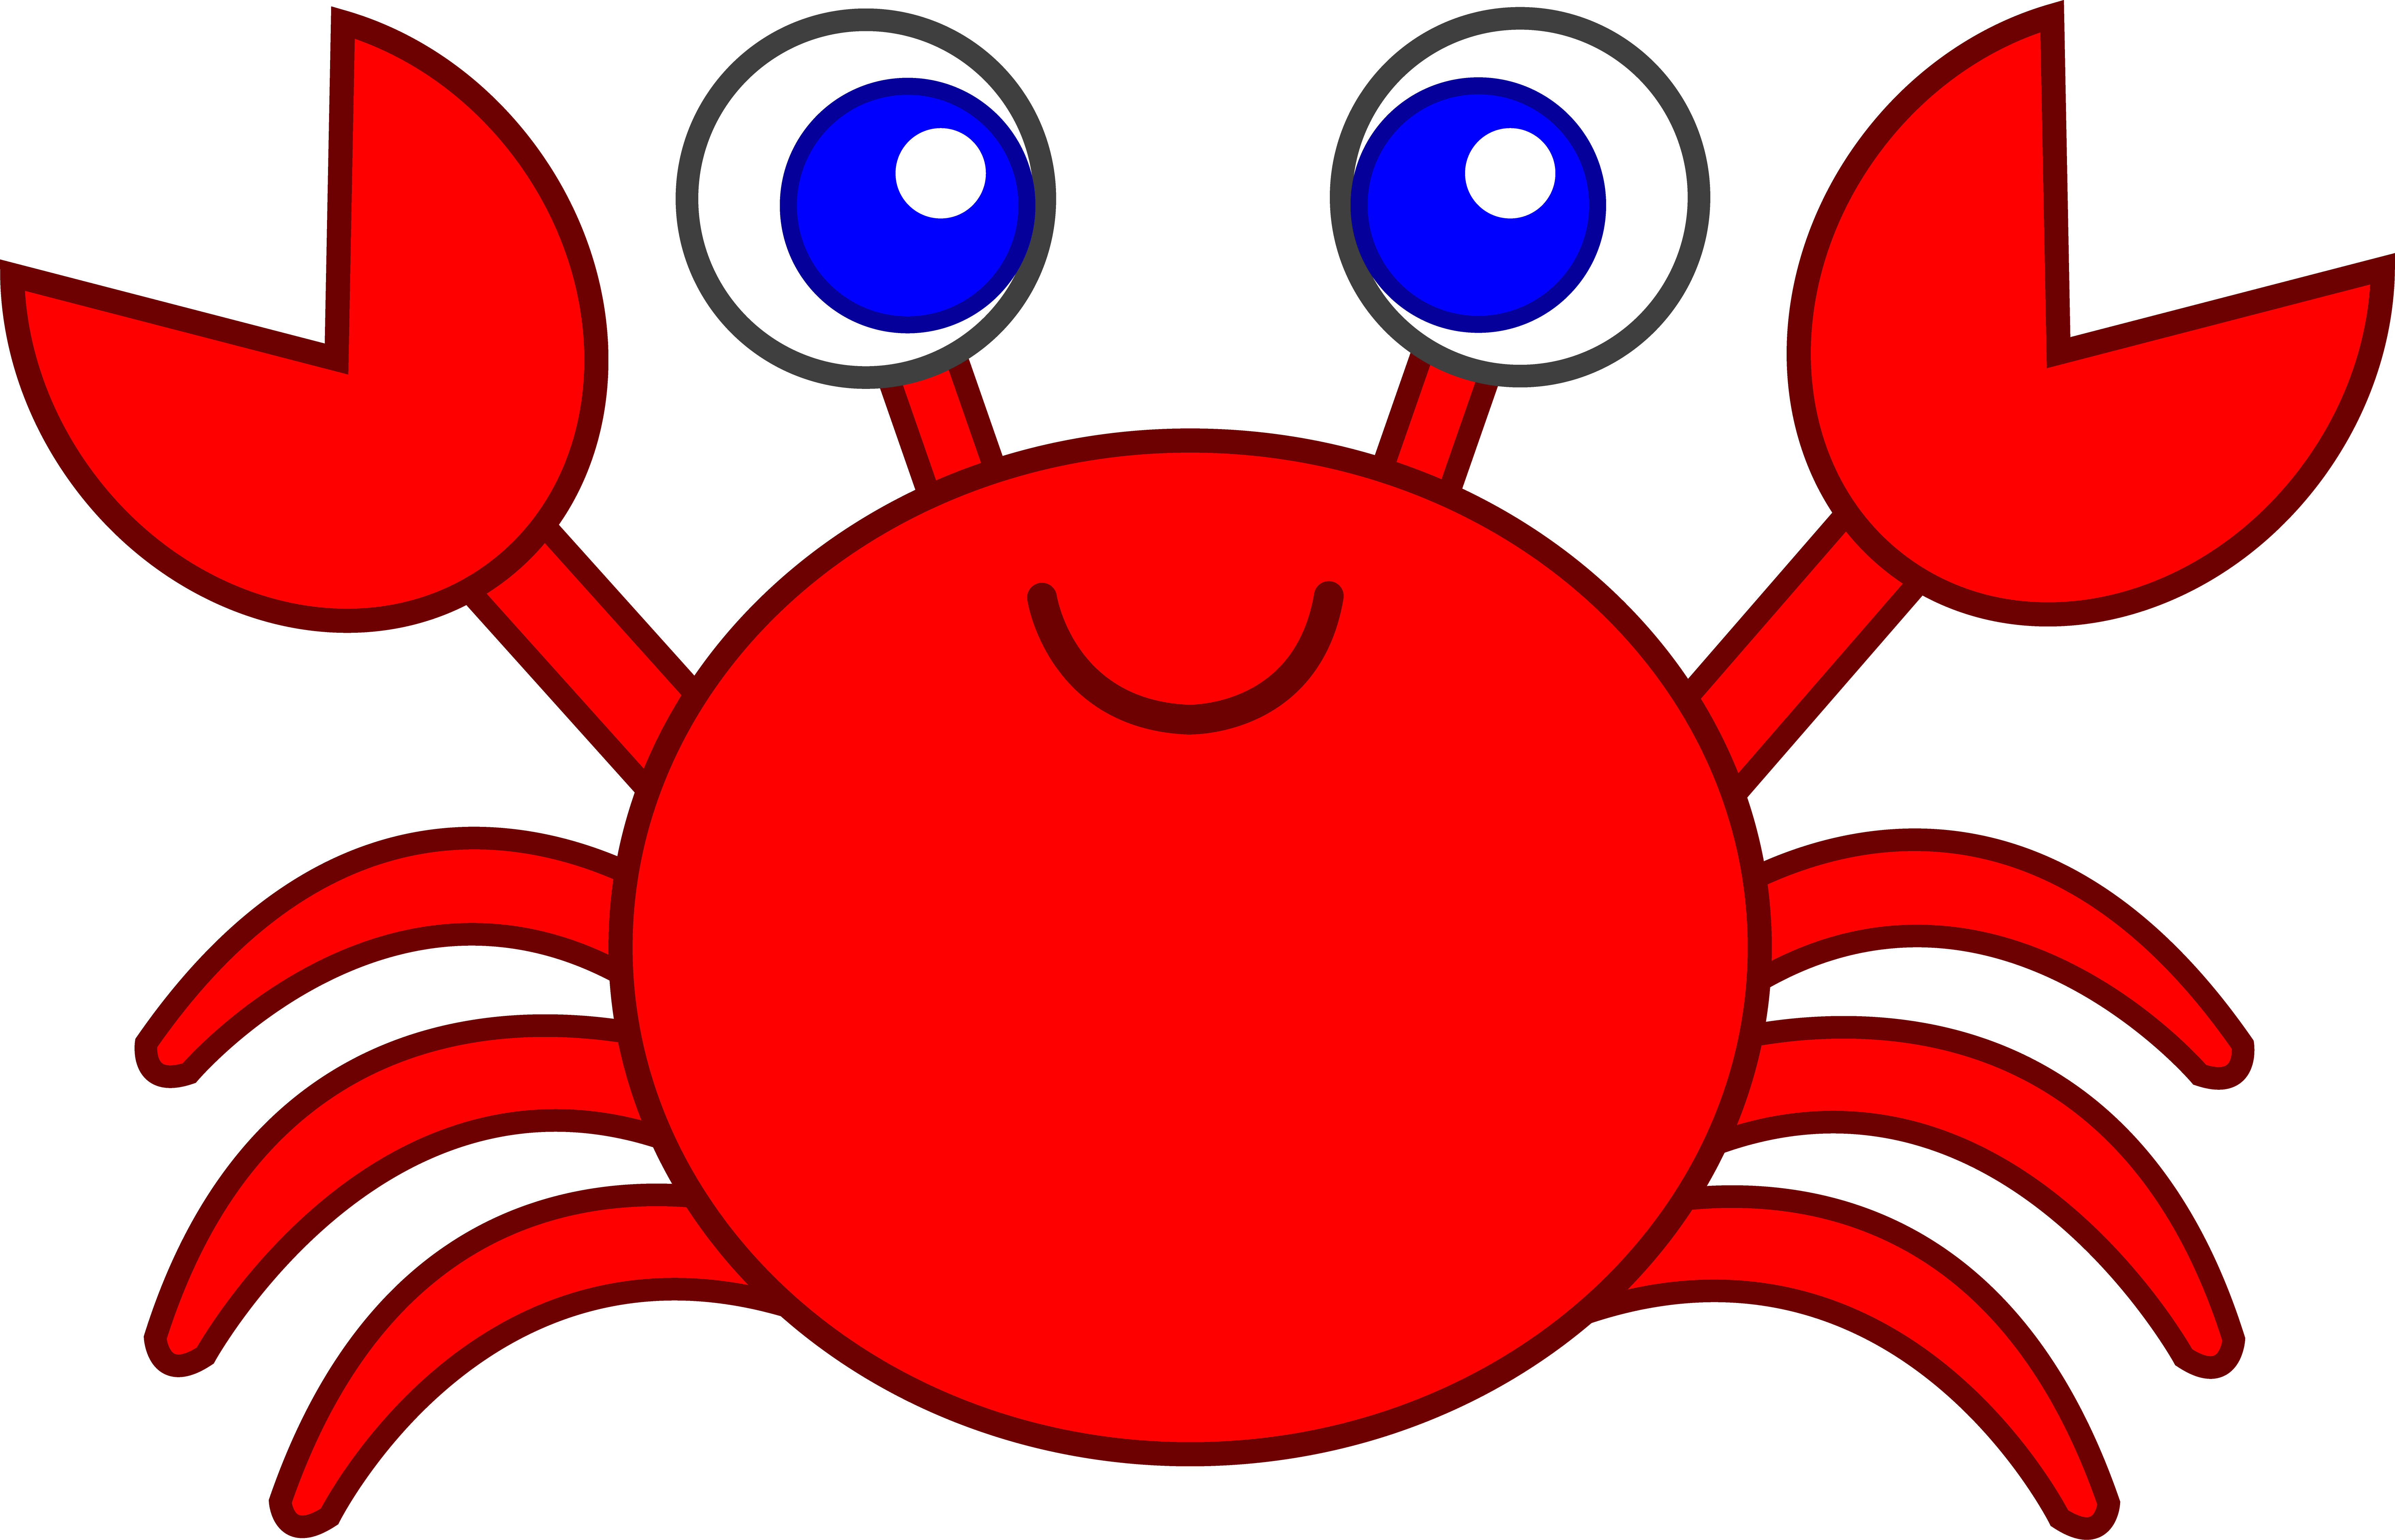 Cute red crab.